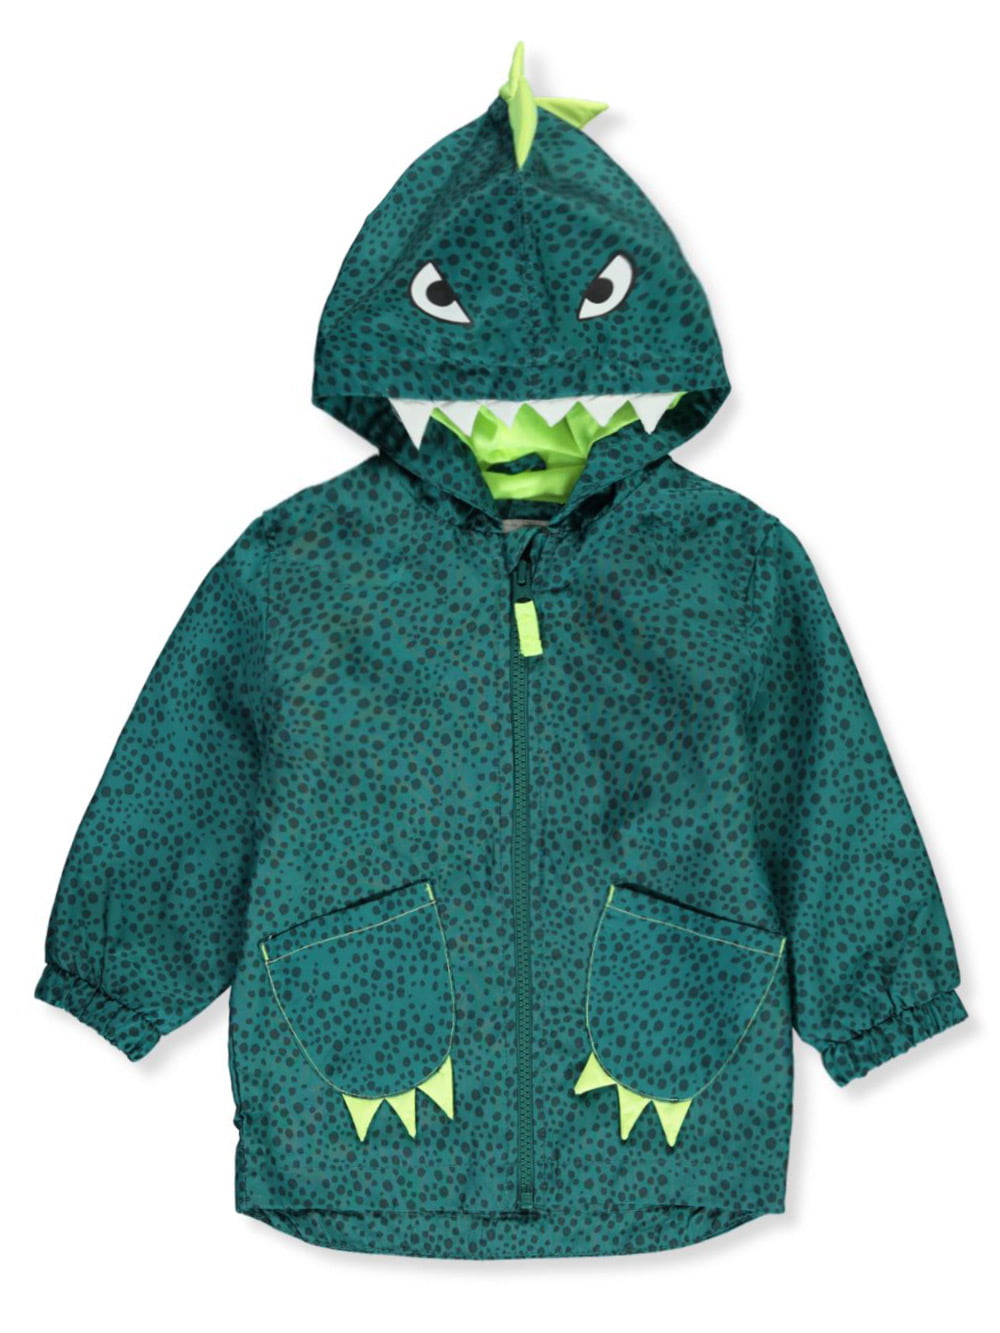 Carter's Carter's Baby Boys' Dinosaur Rain Jacket (Infant)